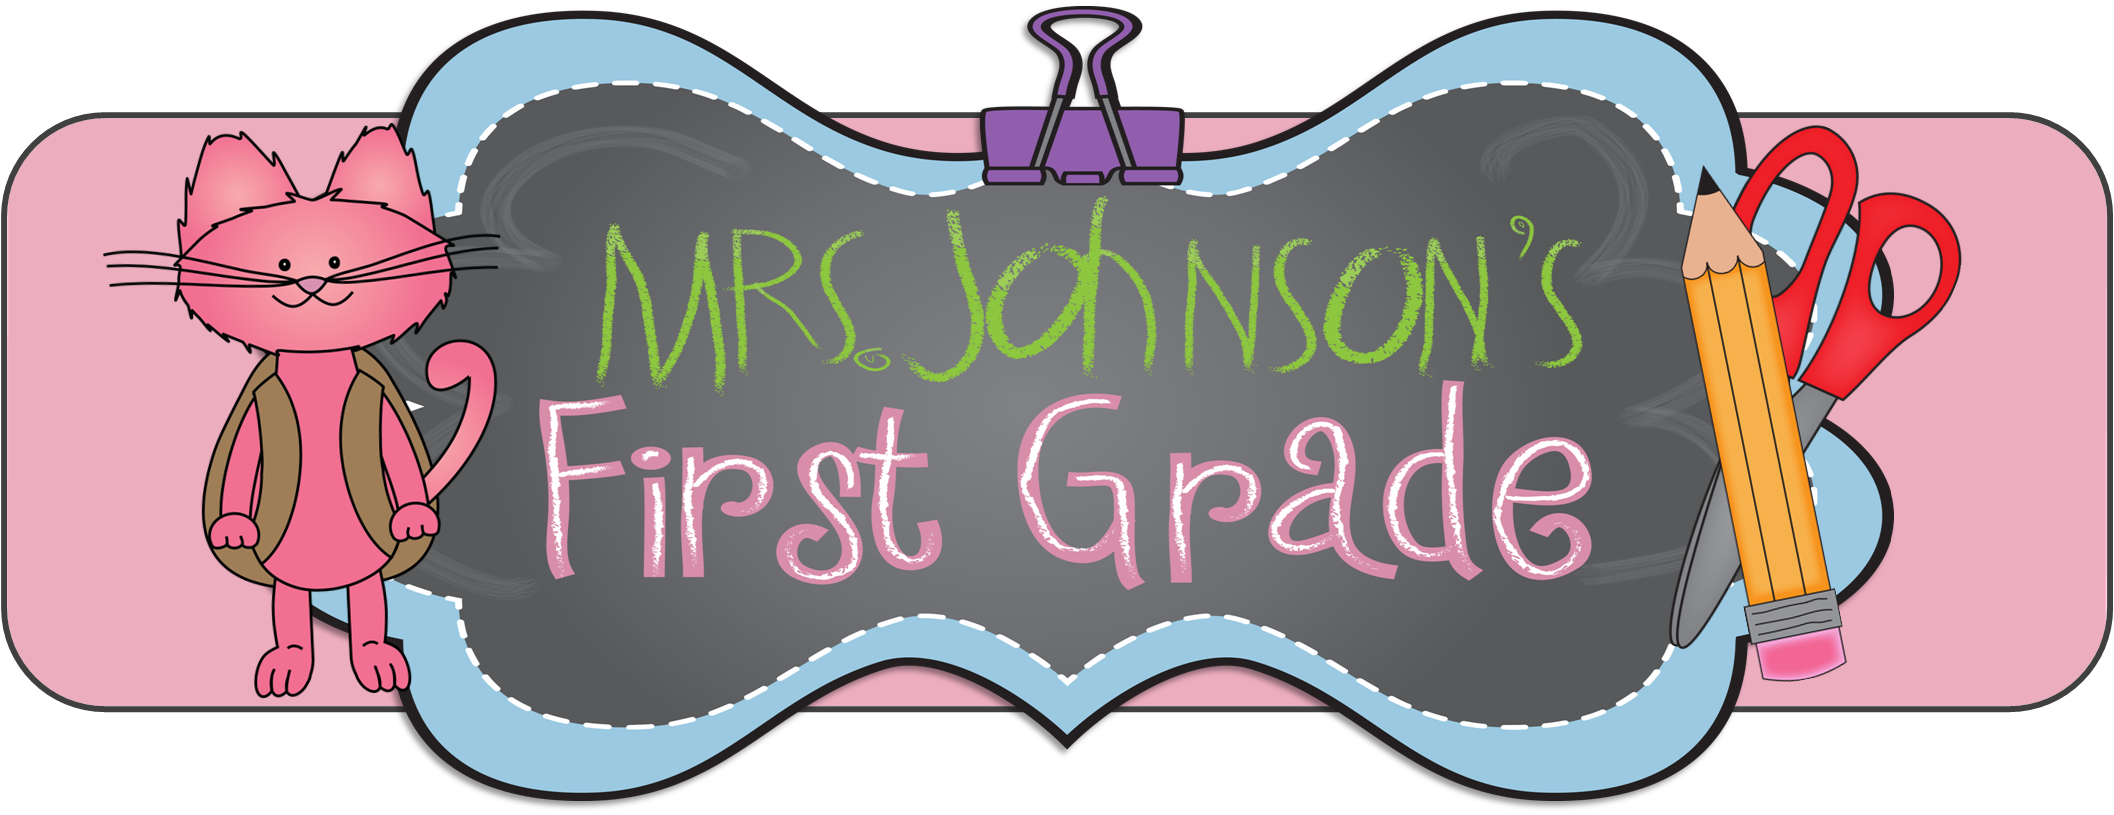 Mrs. Johnson's First Grade: July 2012